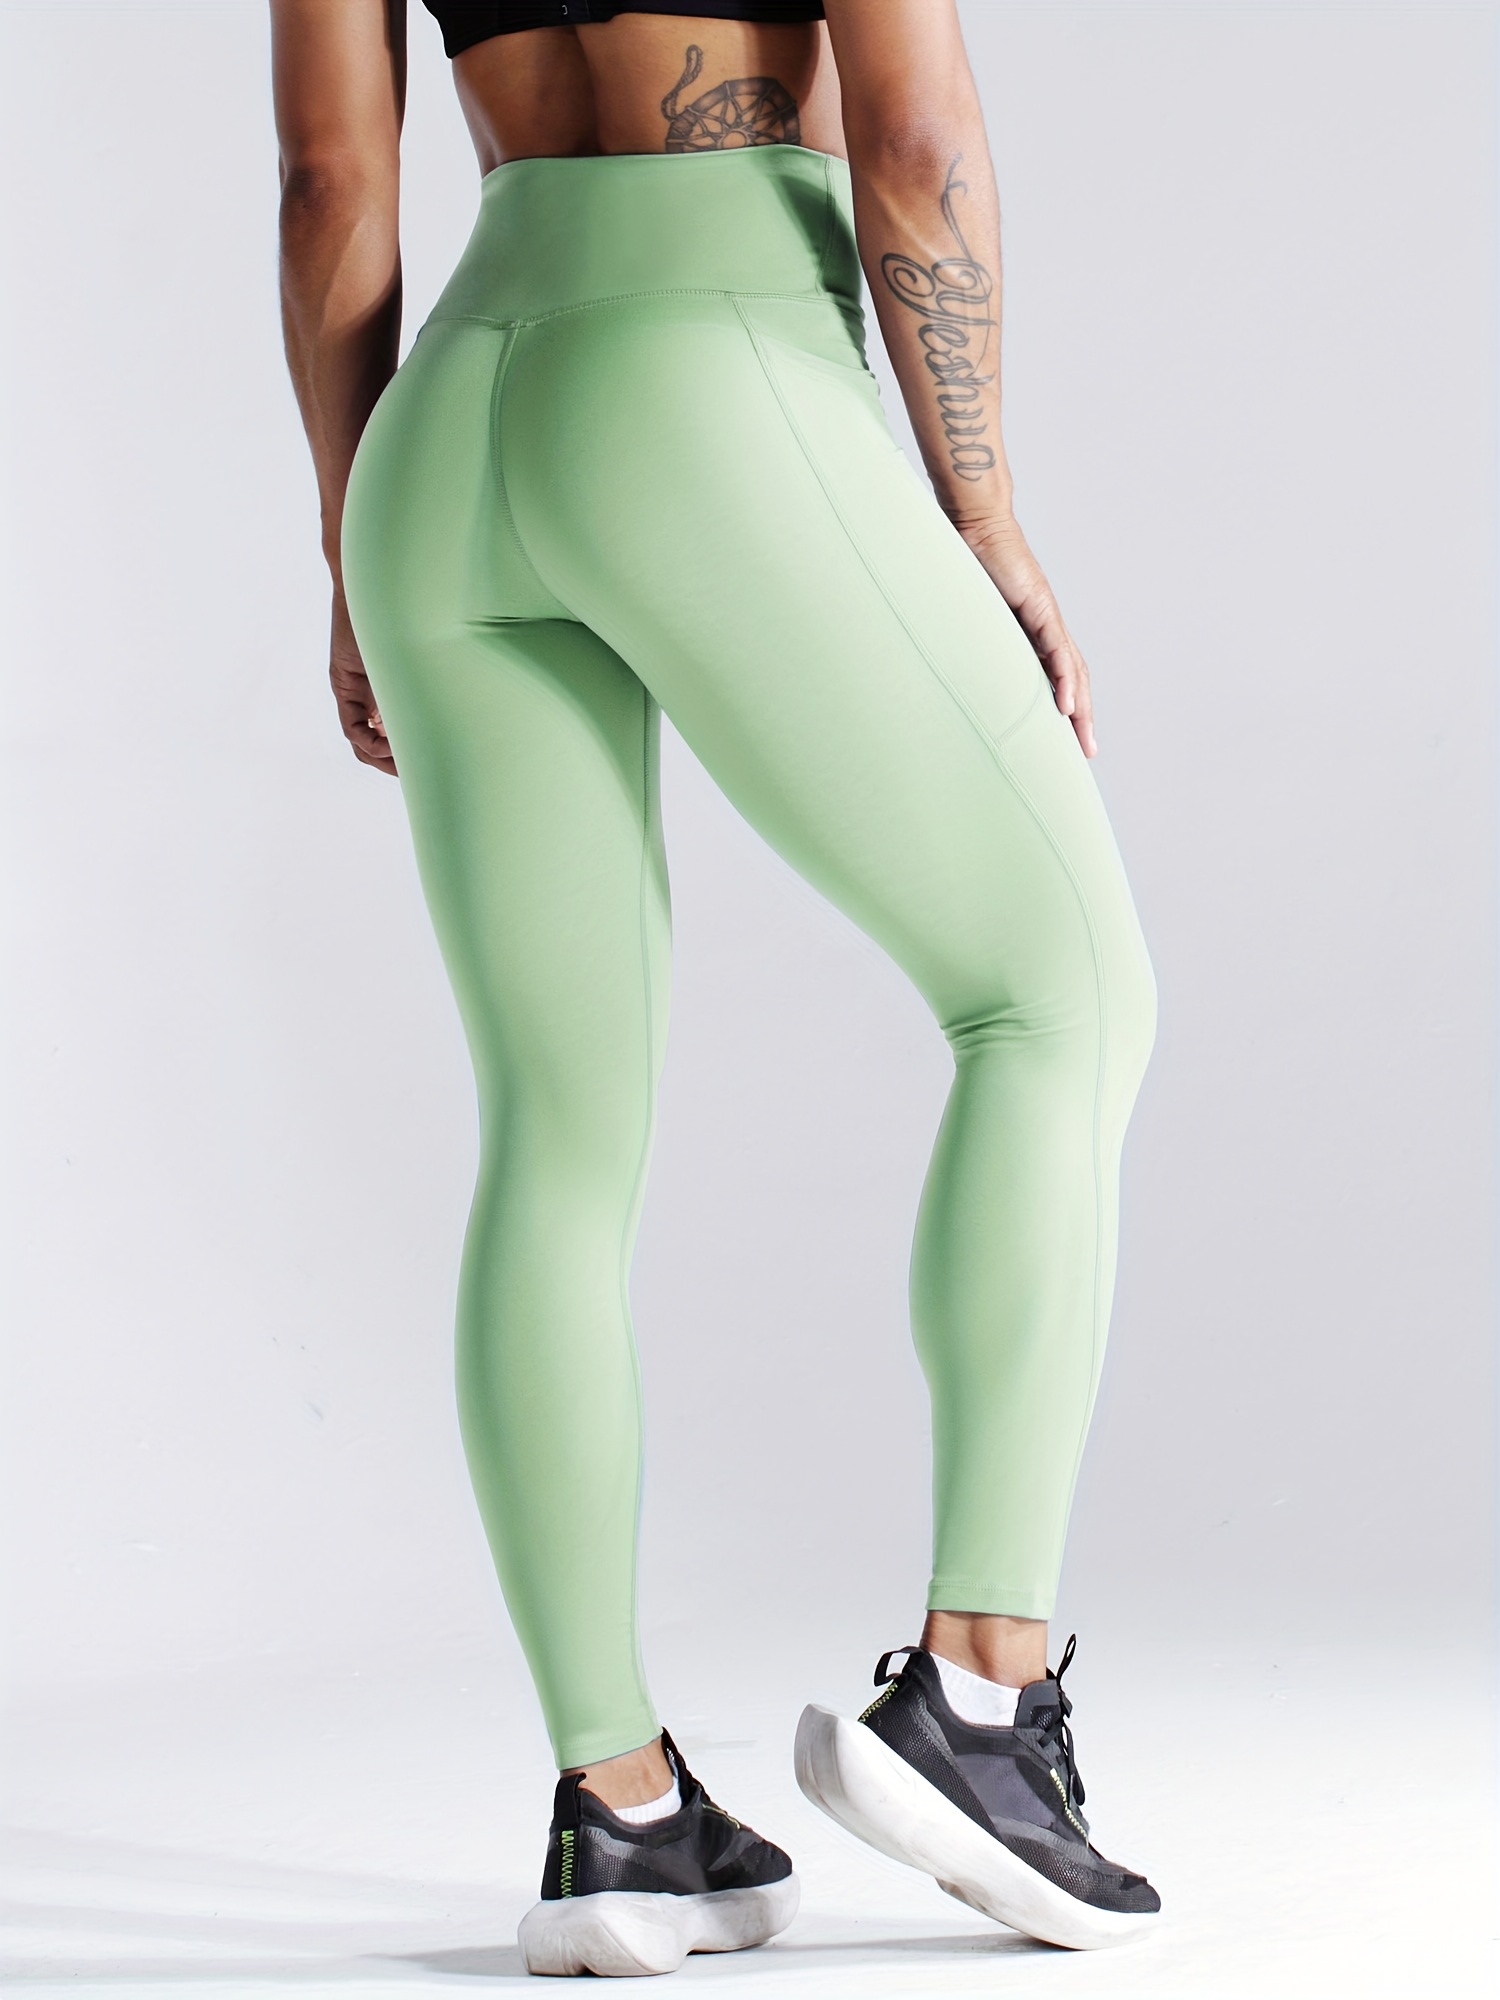 Mint Green Active Bottoms Women's Sports Leggings (Women's)